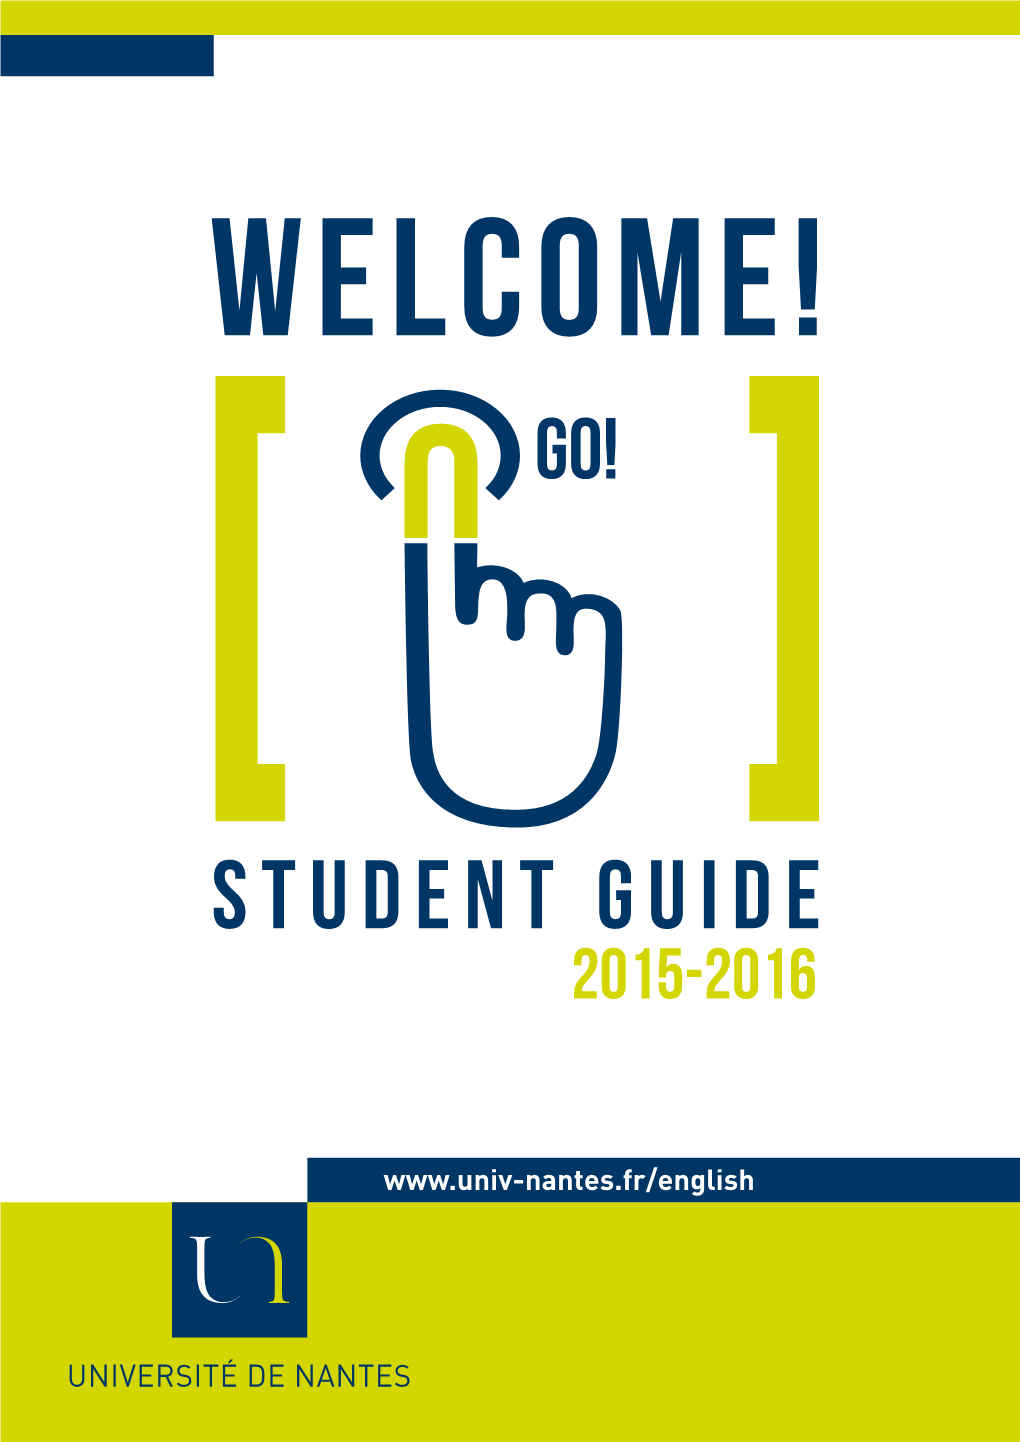 Nantes Student Guide 2015-2016 // Student Guide 2015-2016 // [ STUDENT LIFE ] 54 [ STUDENT LIFE ] 55